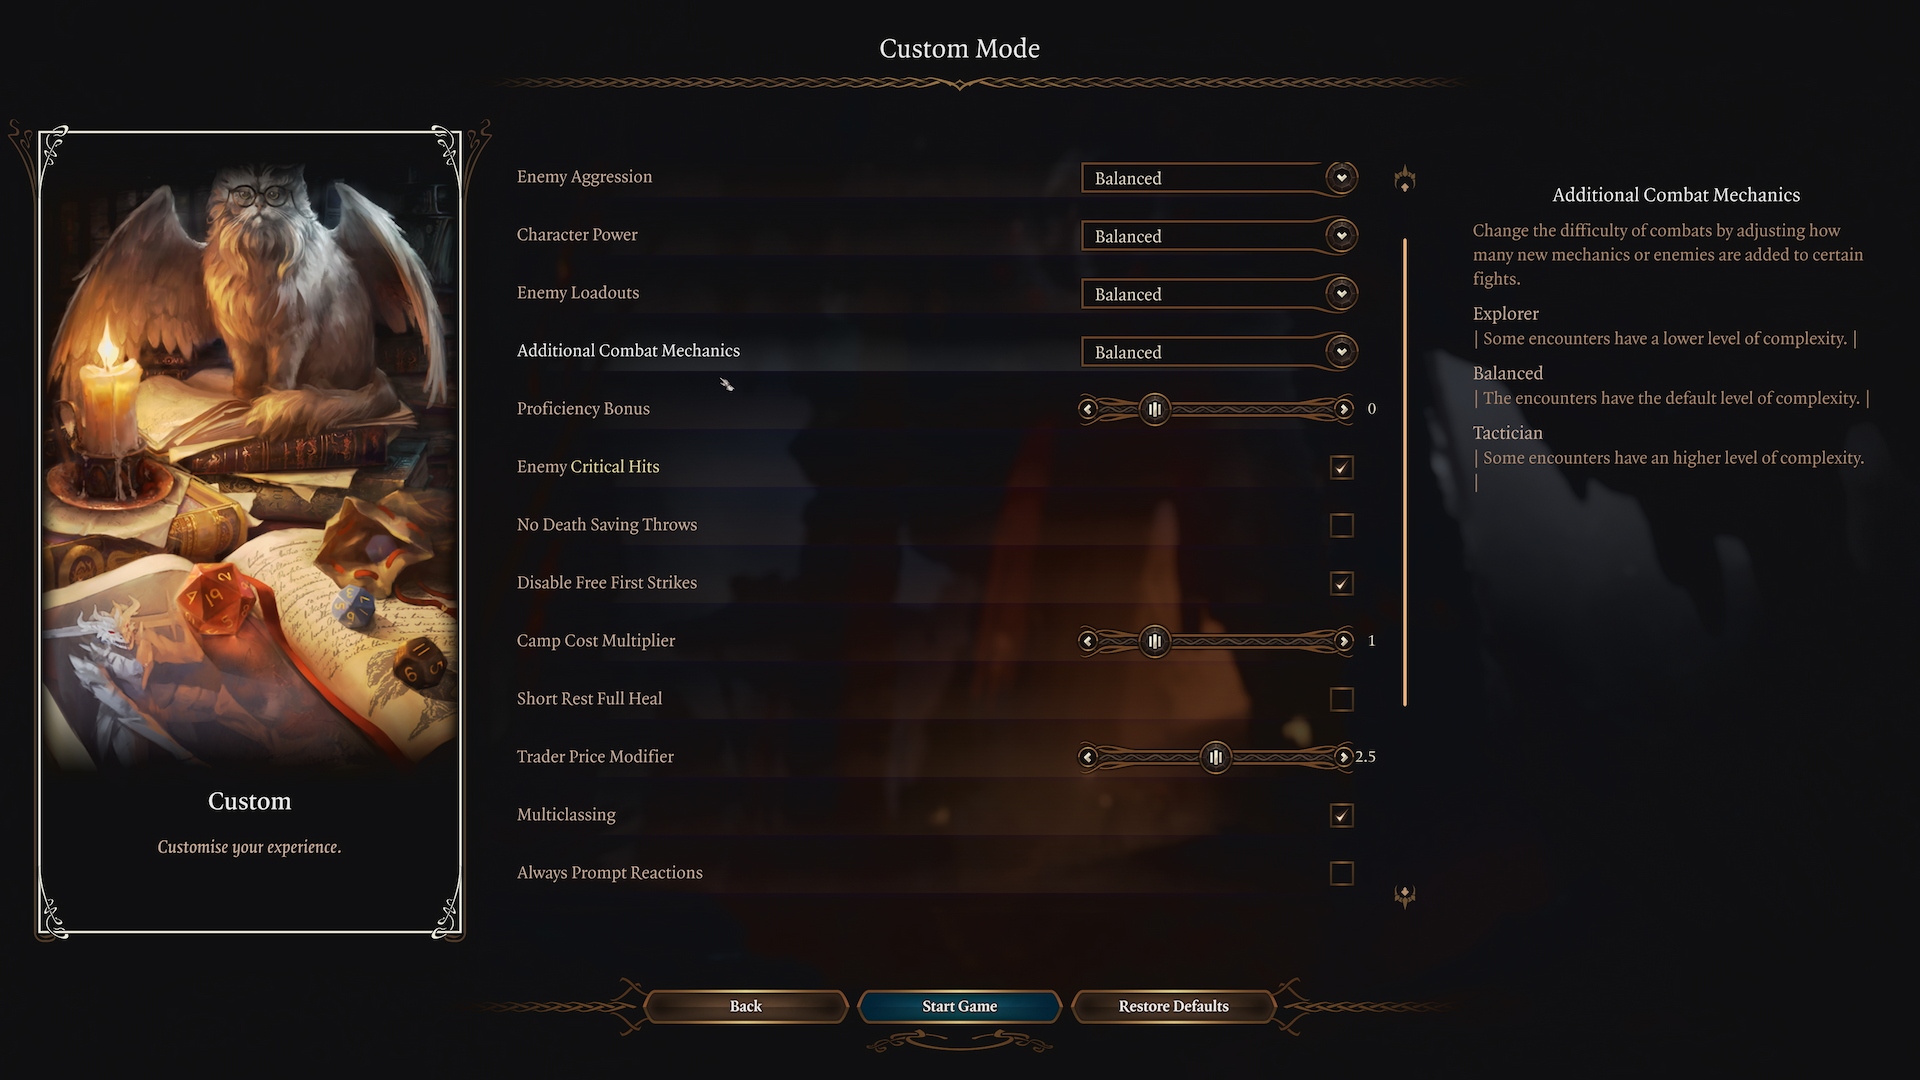 Baldur's Gate 3 screenshot showing the new custom game mode options